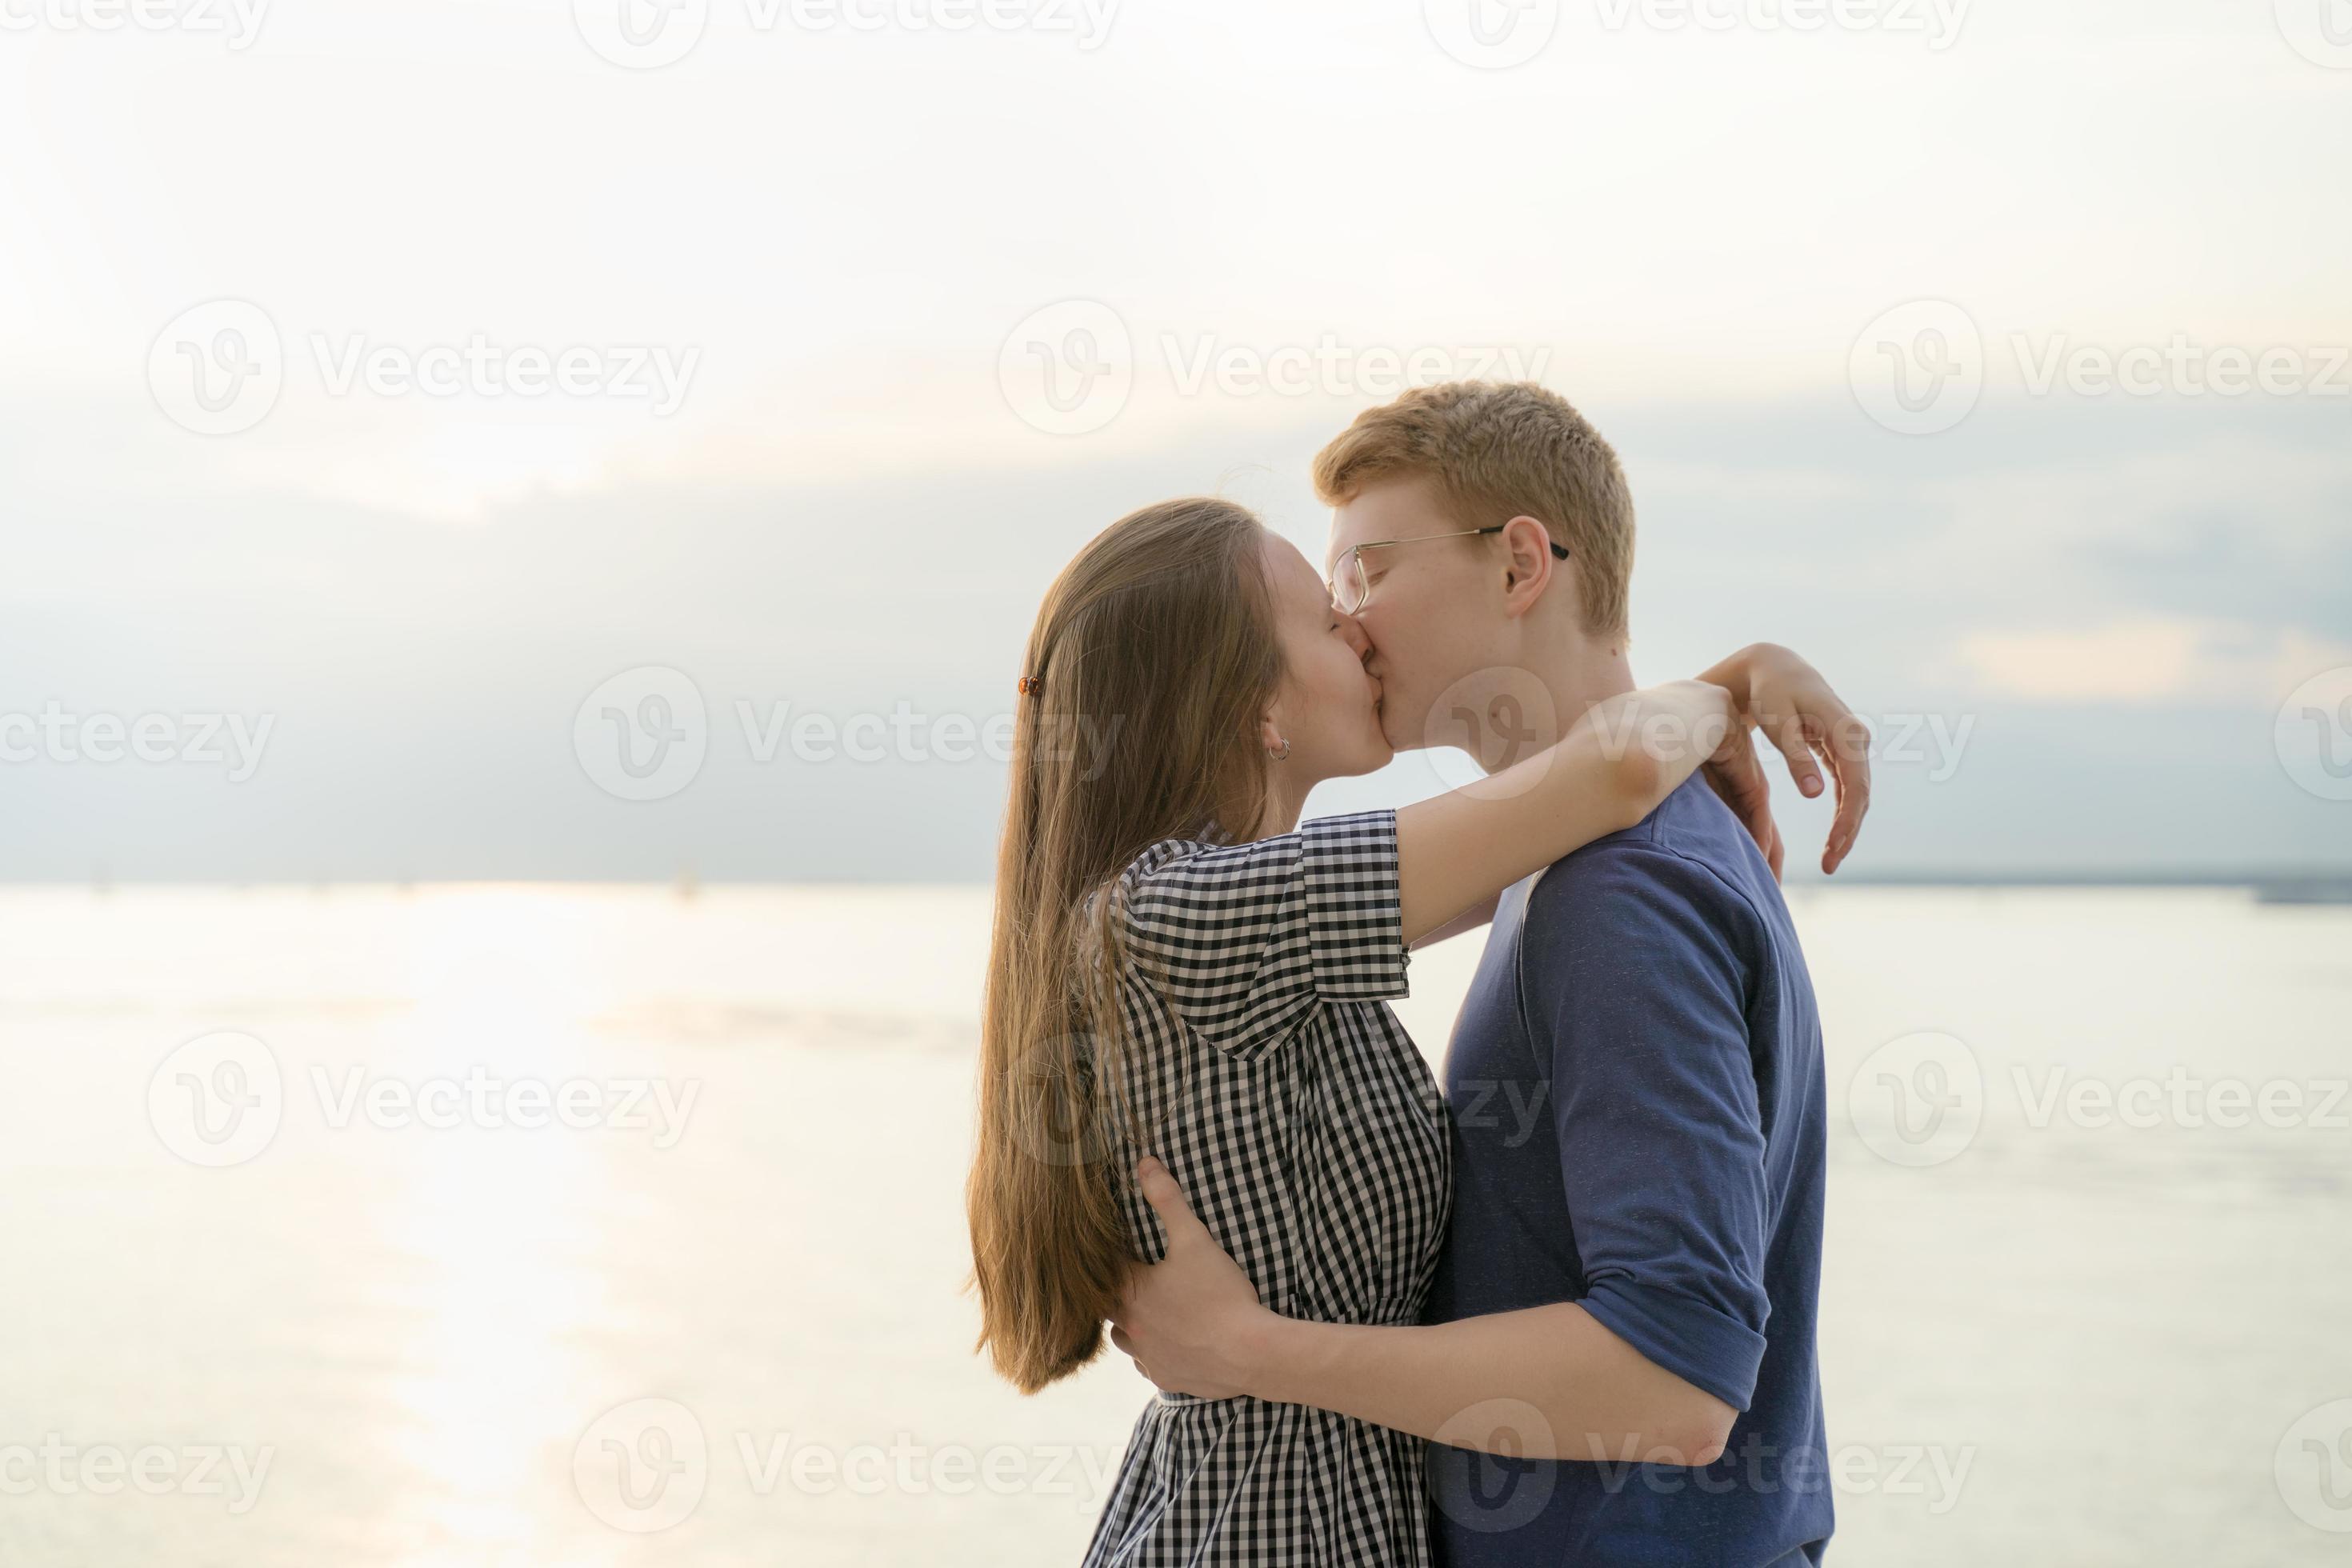 david vriendts share teen couples kissing photos